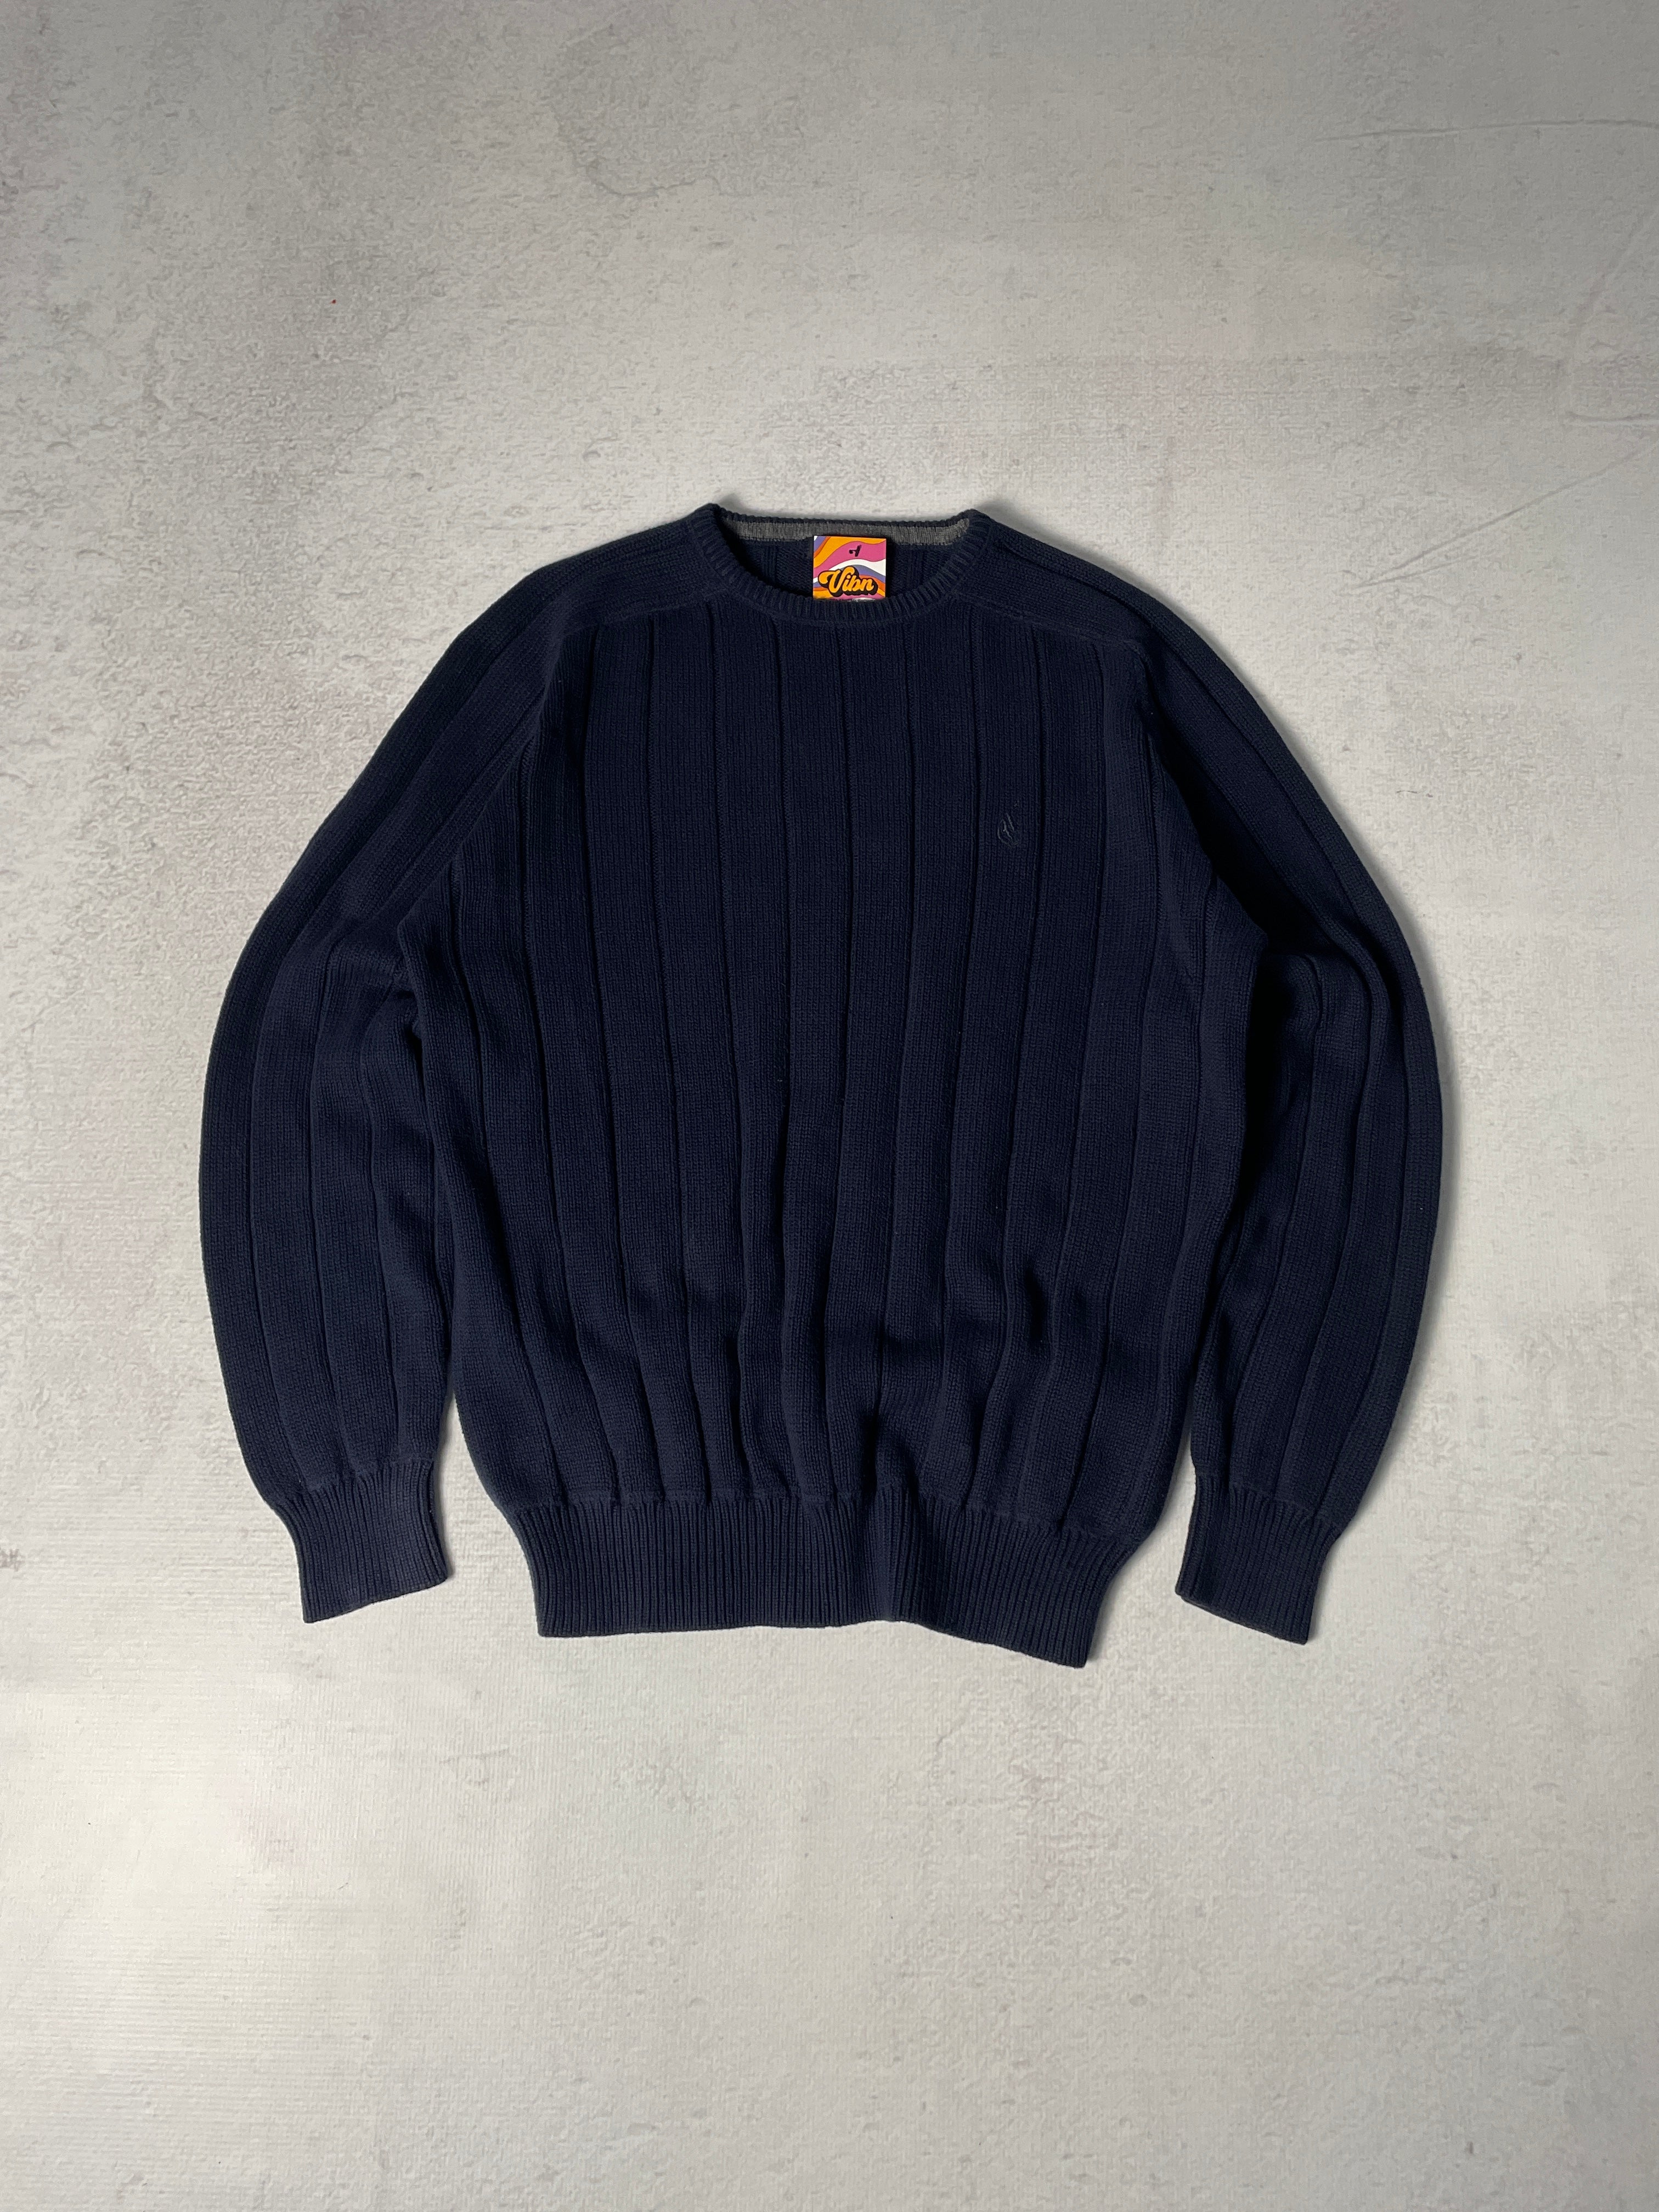 Vintage Nautica Knitted Sweatshirt - Men's 2XL